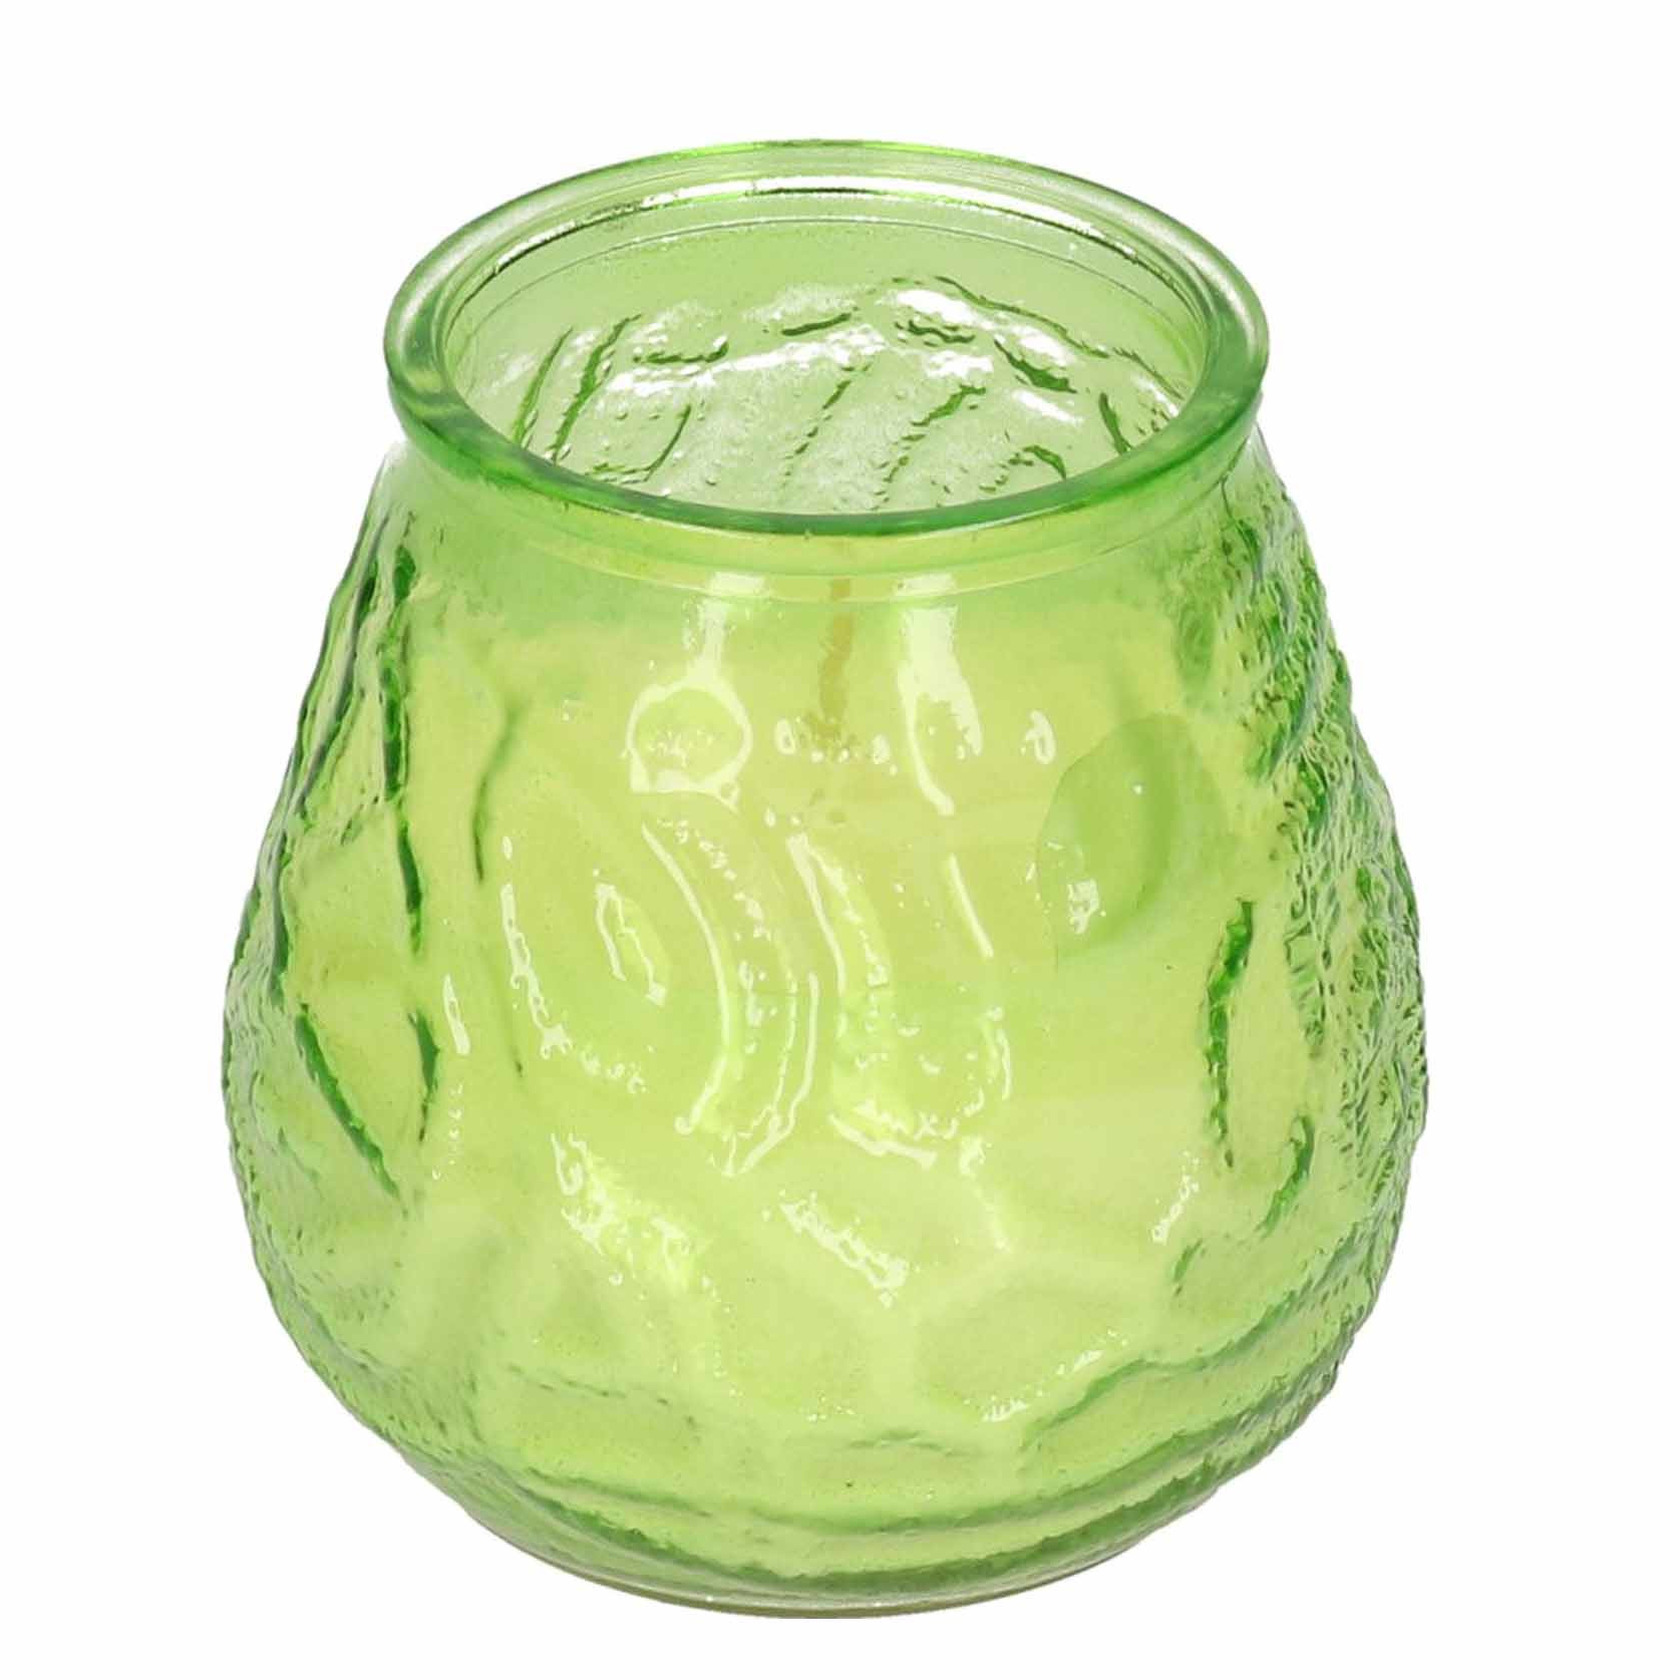 Windlicht geurkaars groen glas 48 branduren citrusgeur